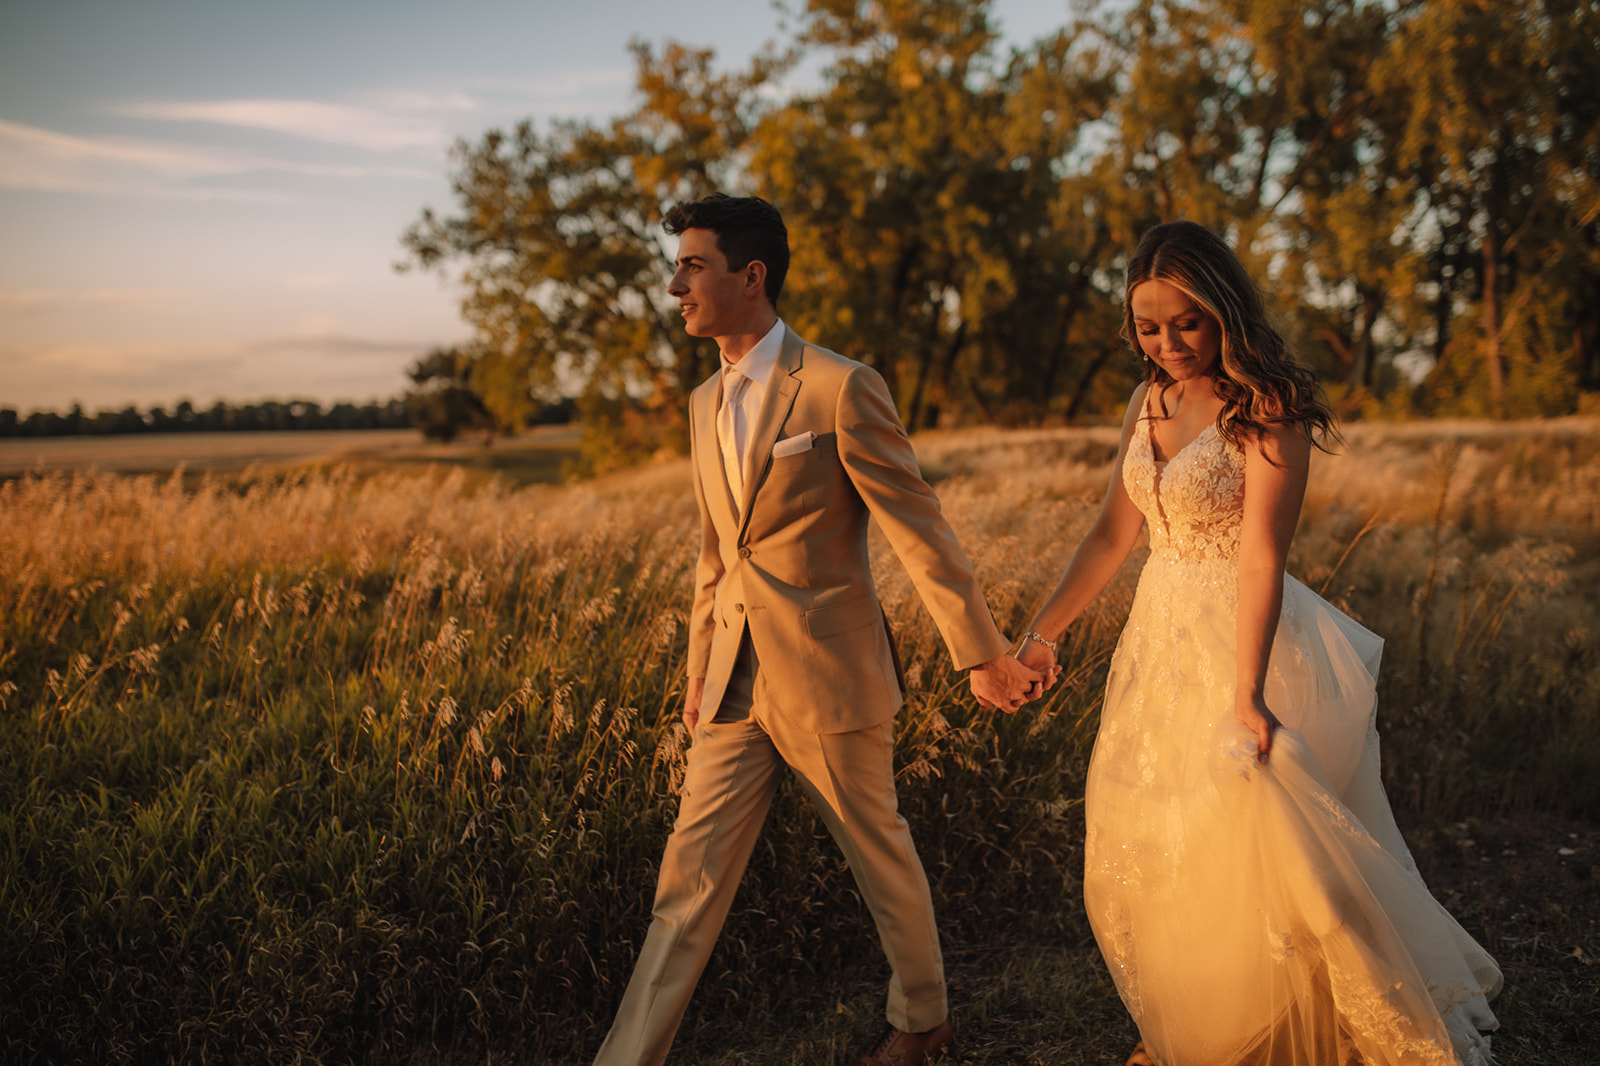 North Dakota Bride and Groom Sunset Portraits at Lone Oak Farm wedding venue